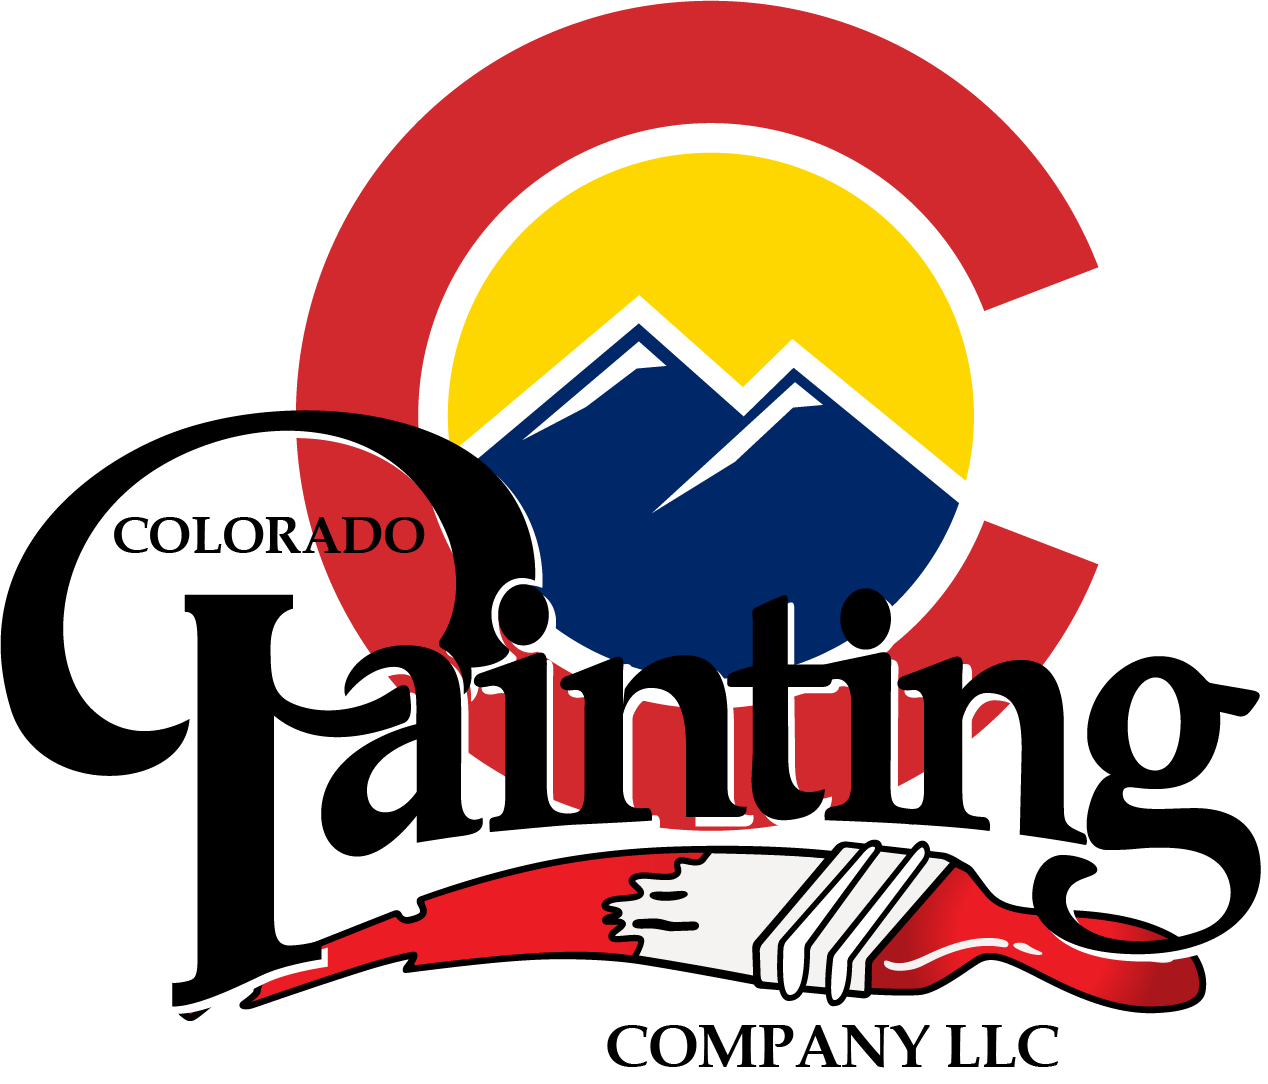 Colorado Painting Company Logo